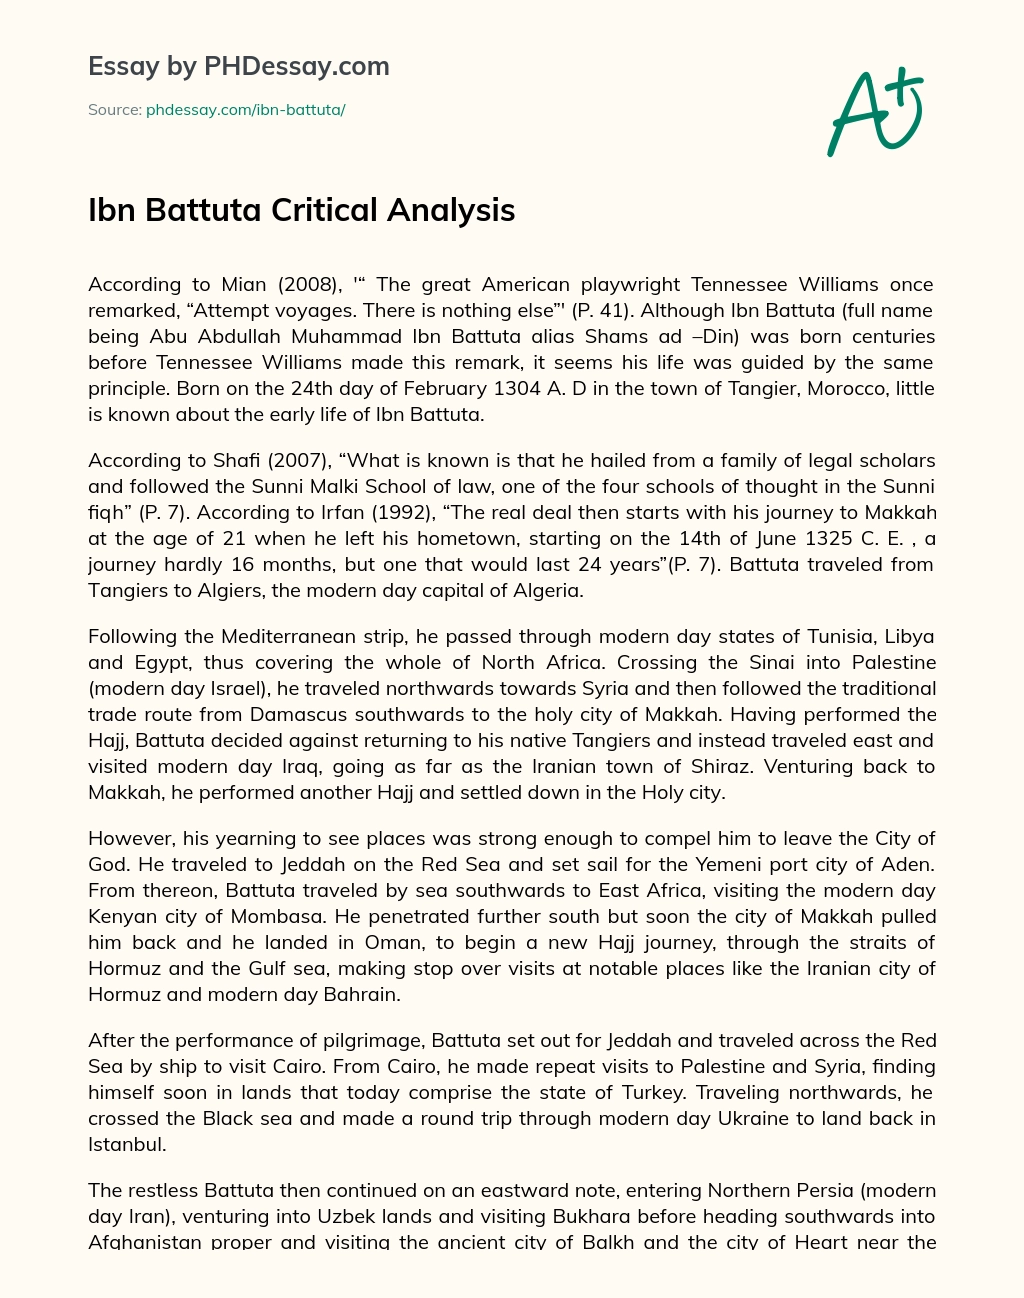 Ibn Battuta Critical Analysis essay